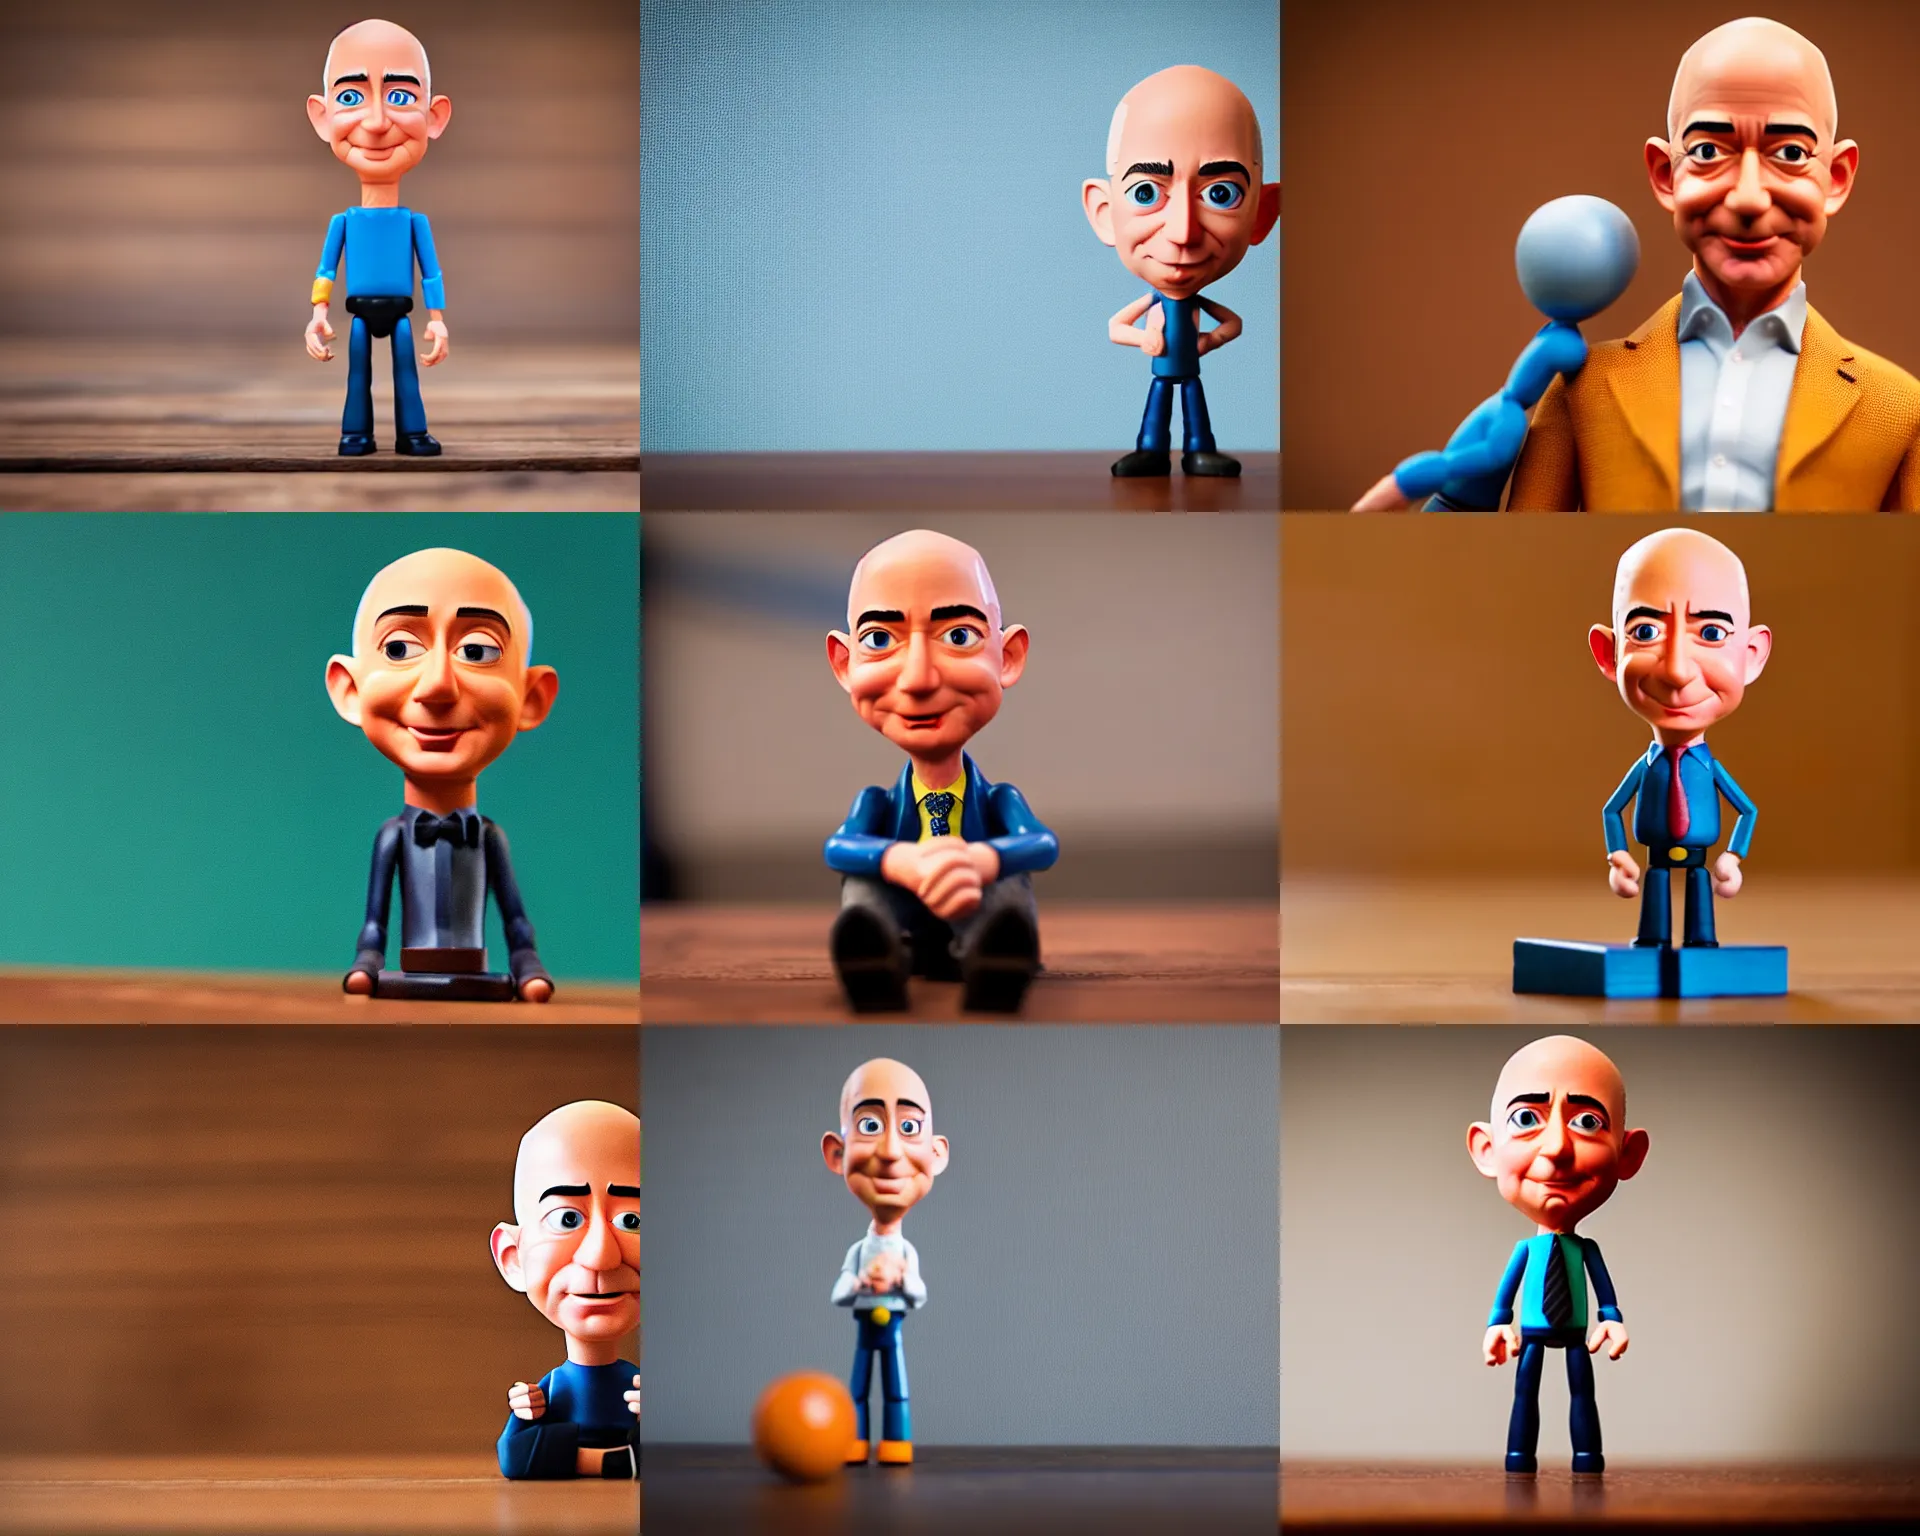 Prompt: Jeff Bezos figurine by Pixar sad bokeh on wooden table.